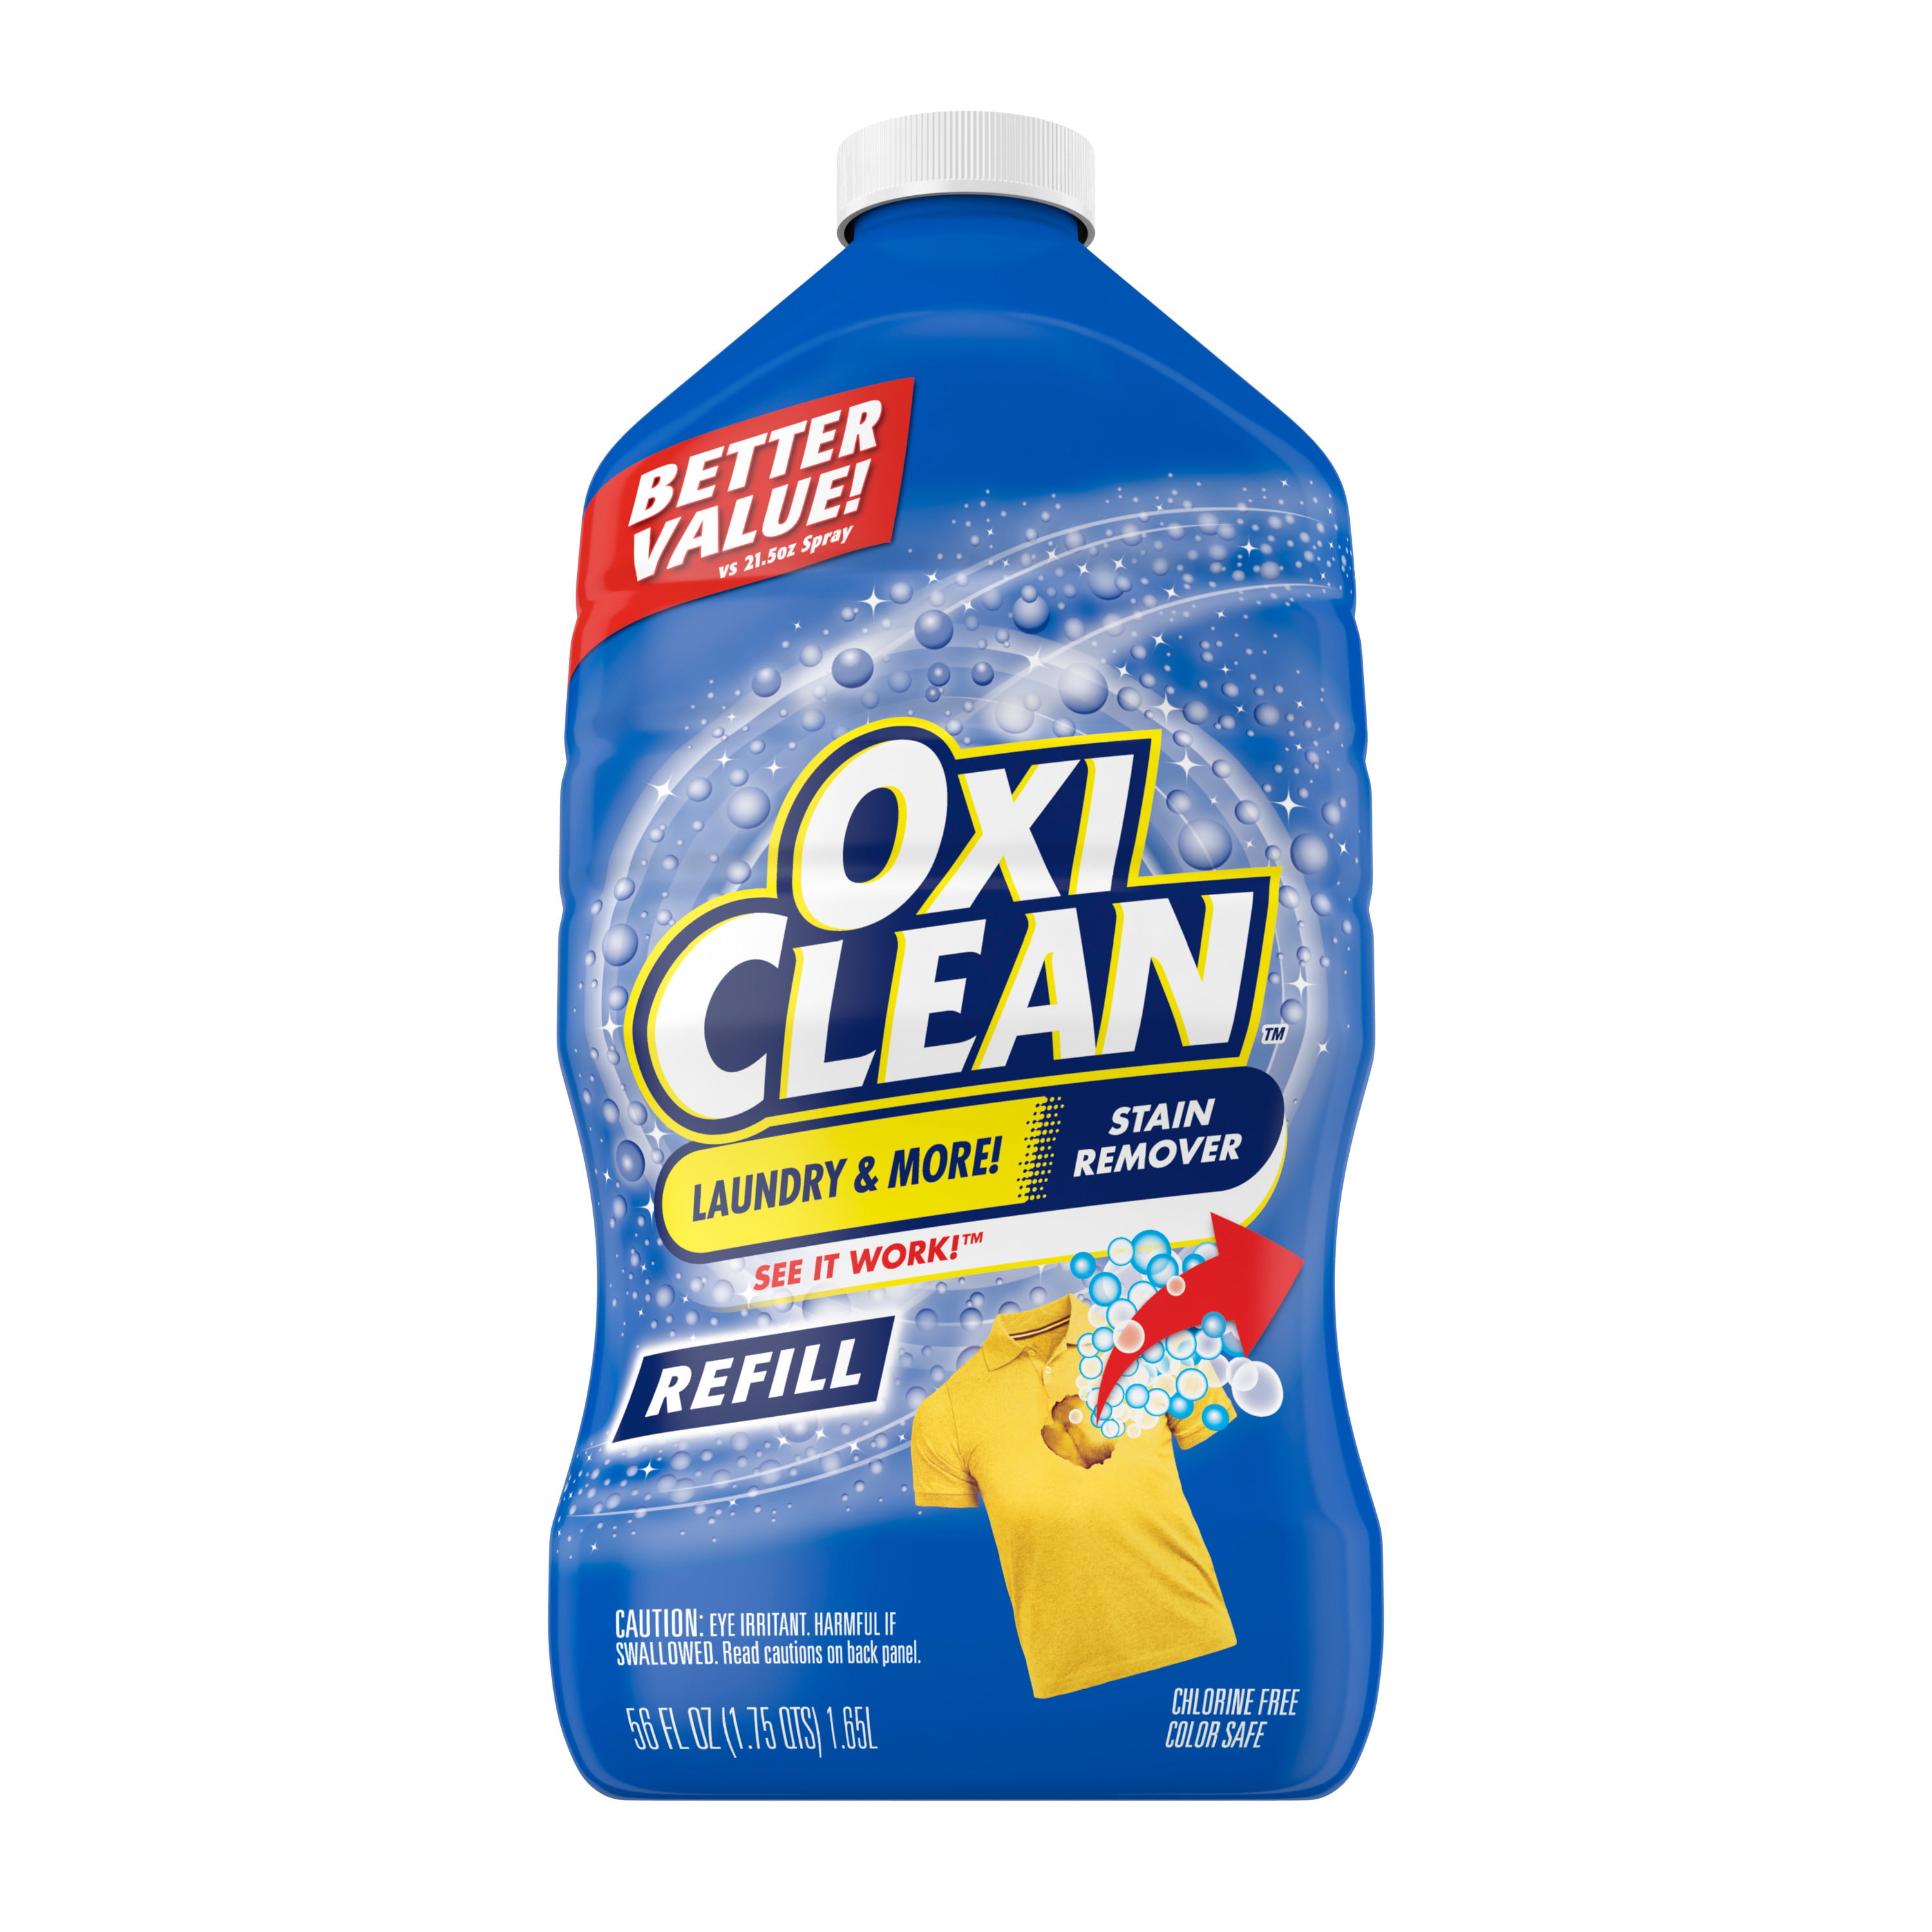 Хлорка цвет. Oxi clean пятновыводитель. Stain Remover. Stain Remover Spray. Stain Remover Spray attitude.